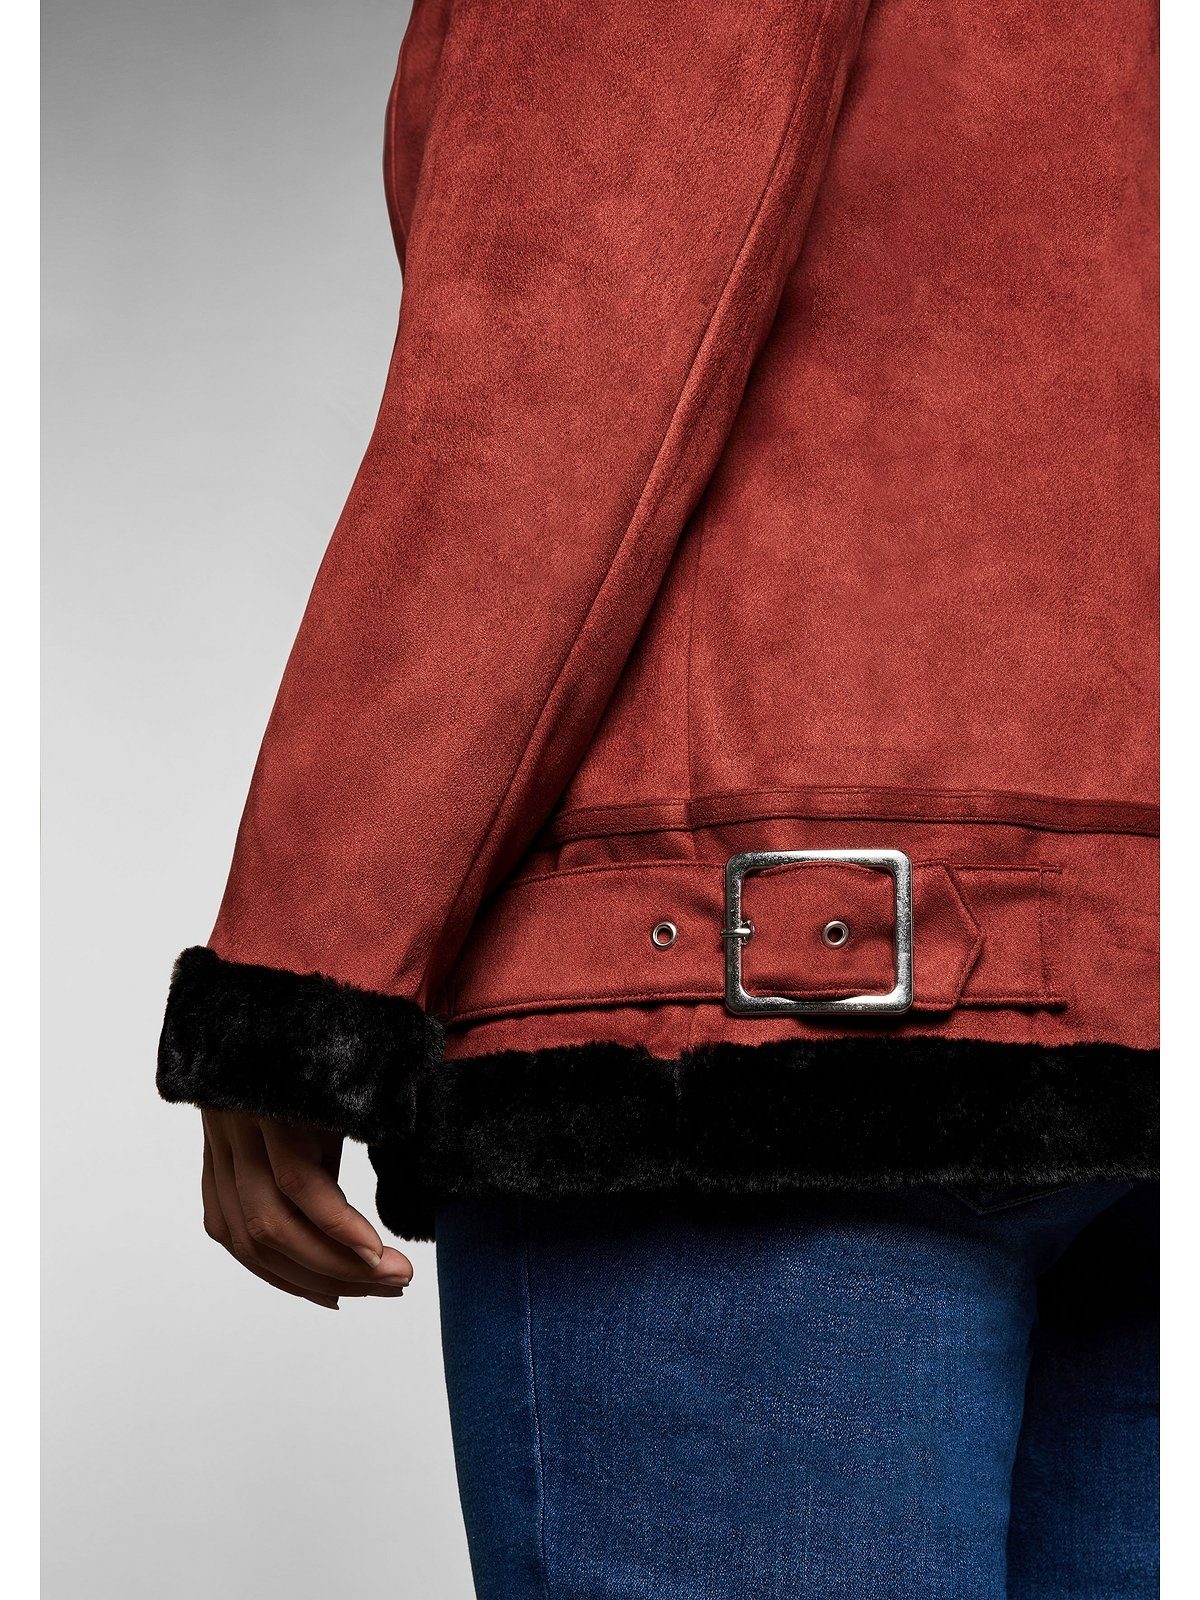 Damen Jacken Sheego Lederimitatjacke Outdoorjacke mit Wattierung und Fellimitatbesatz